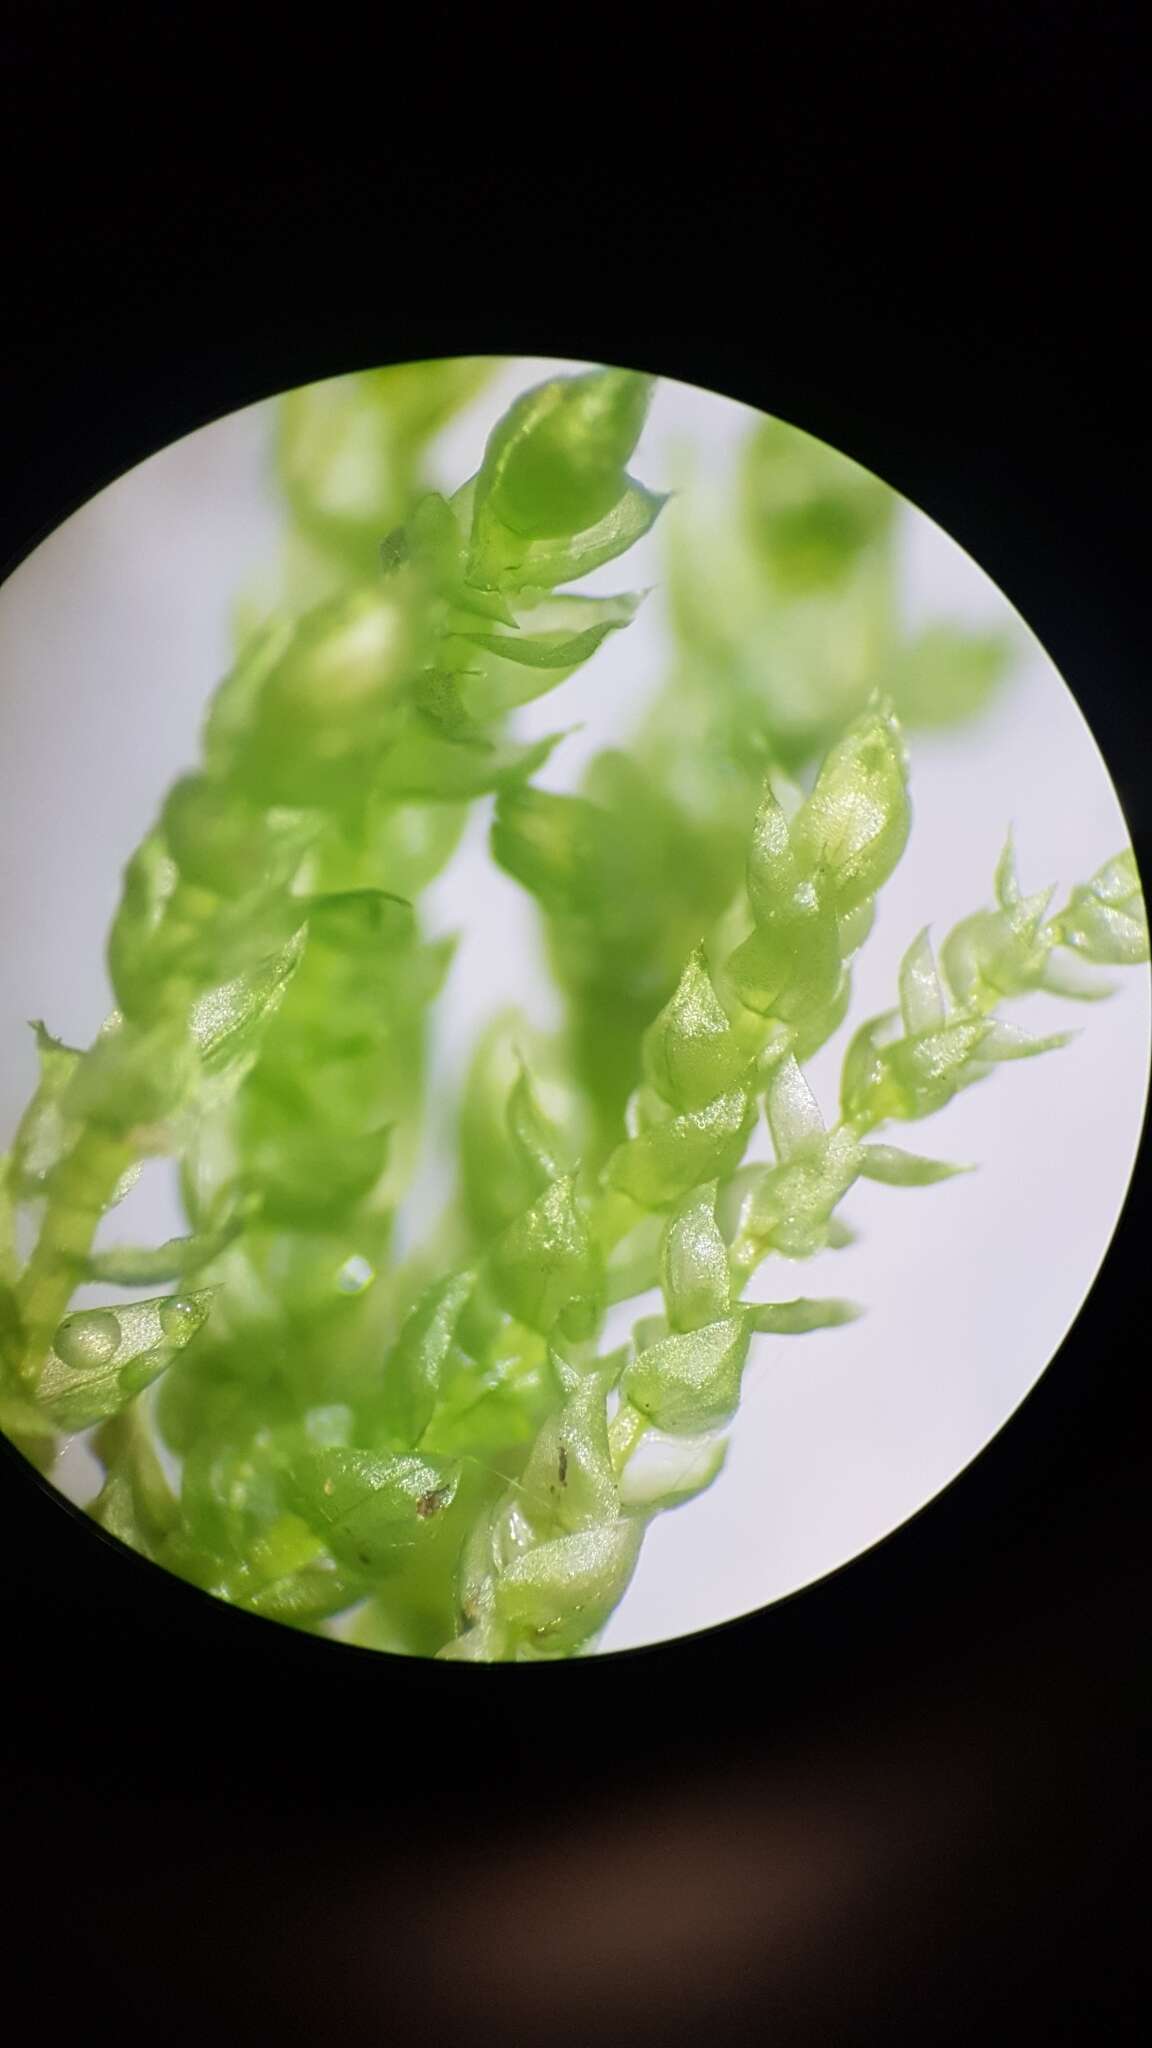 Image of New England bryhnia moss